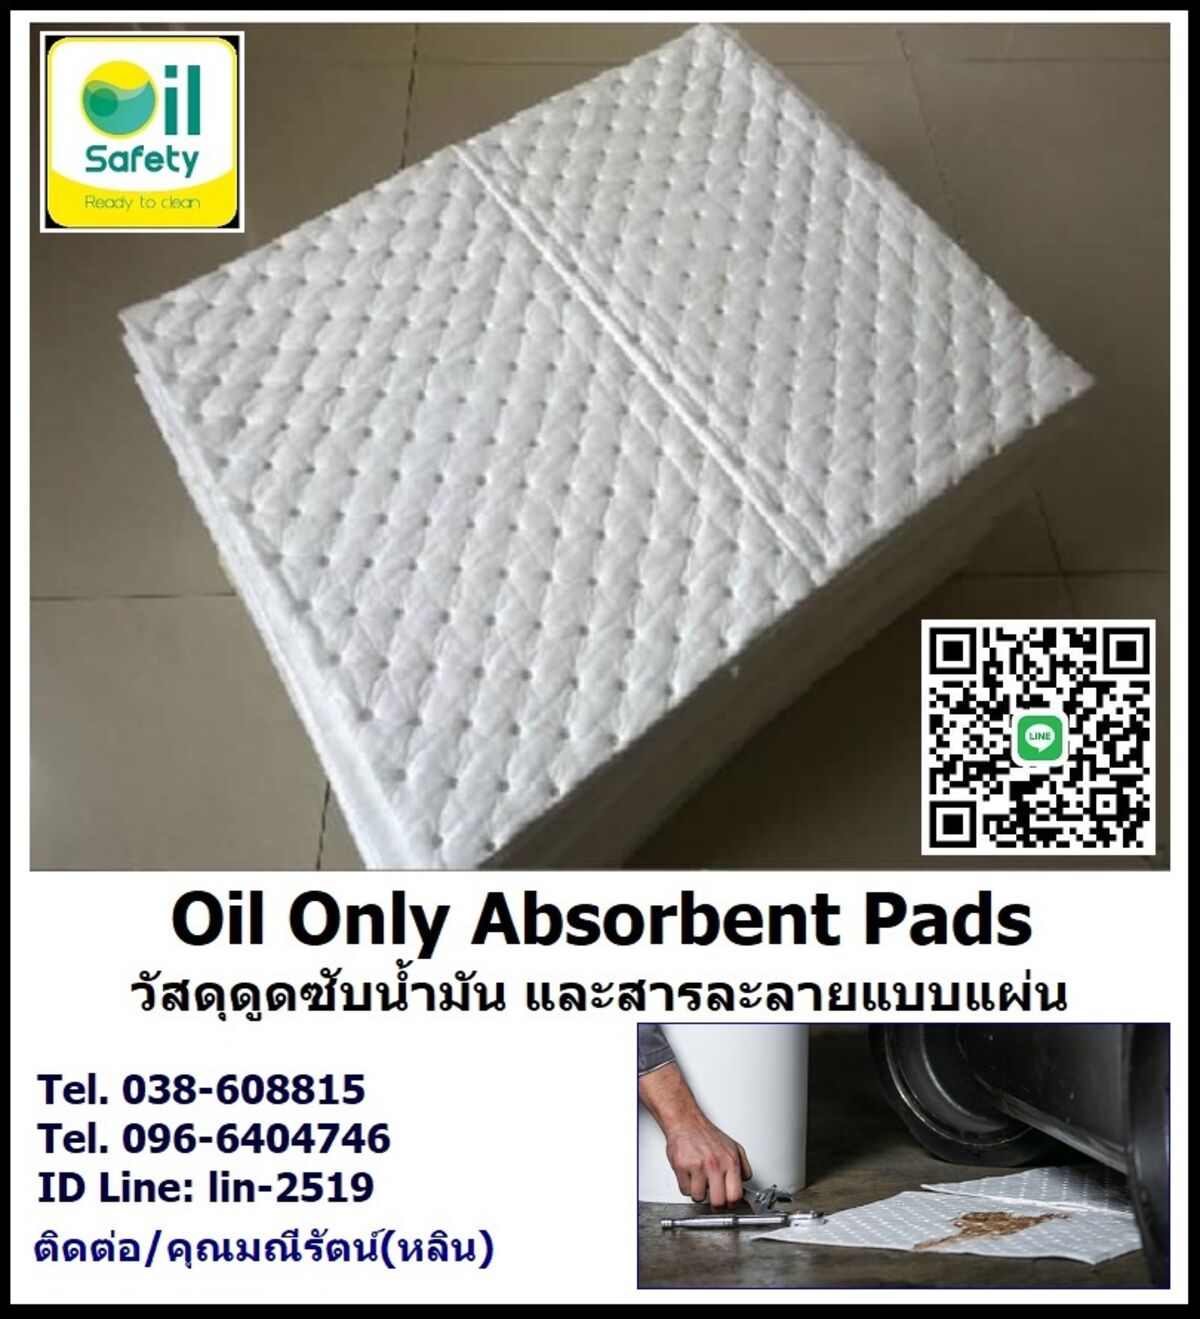 Oil Only Absorbent Pads - บริษัท เซอร์เฟซ โพร-เท็ค จำกัด